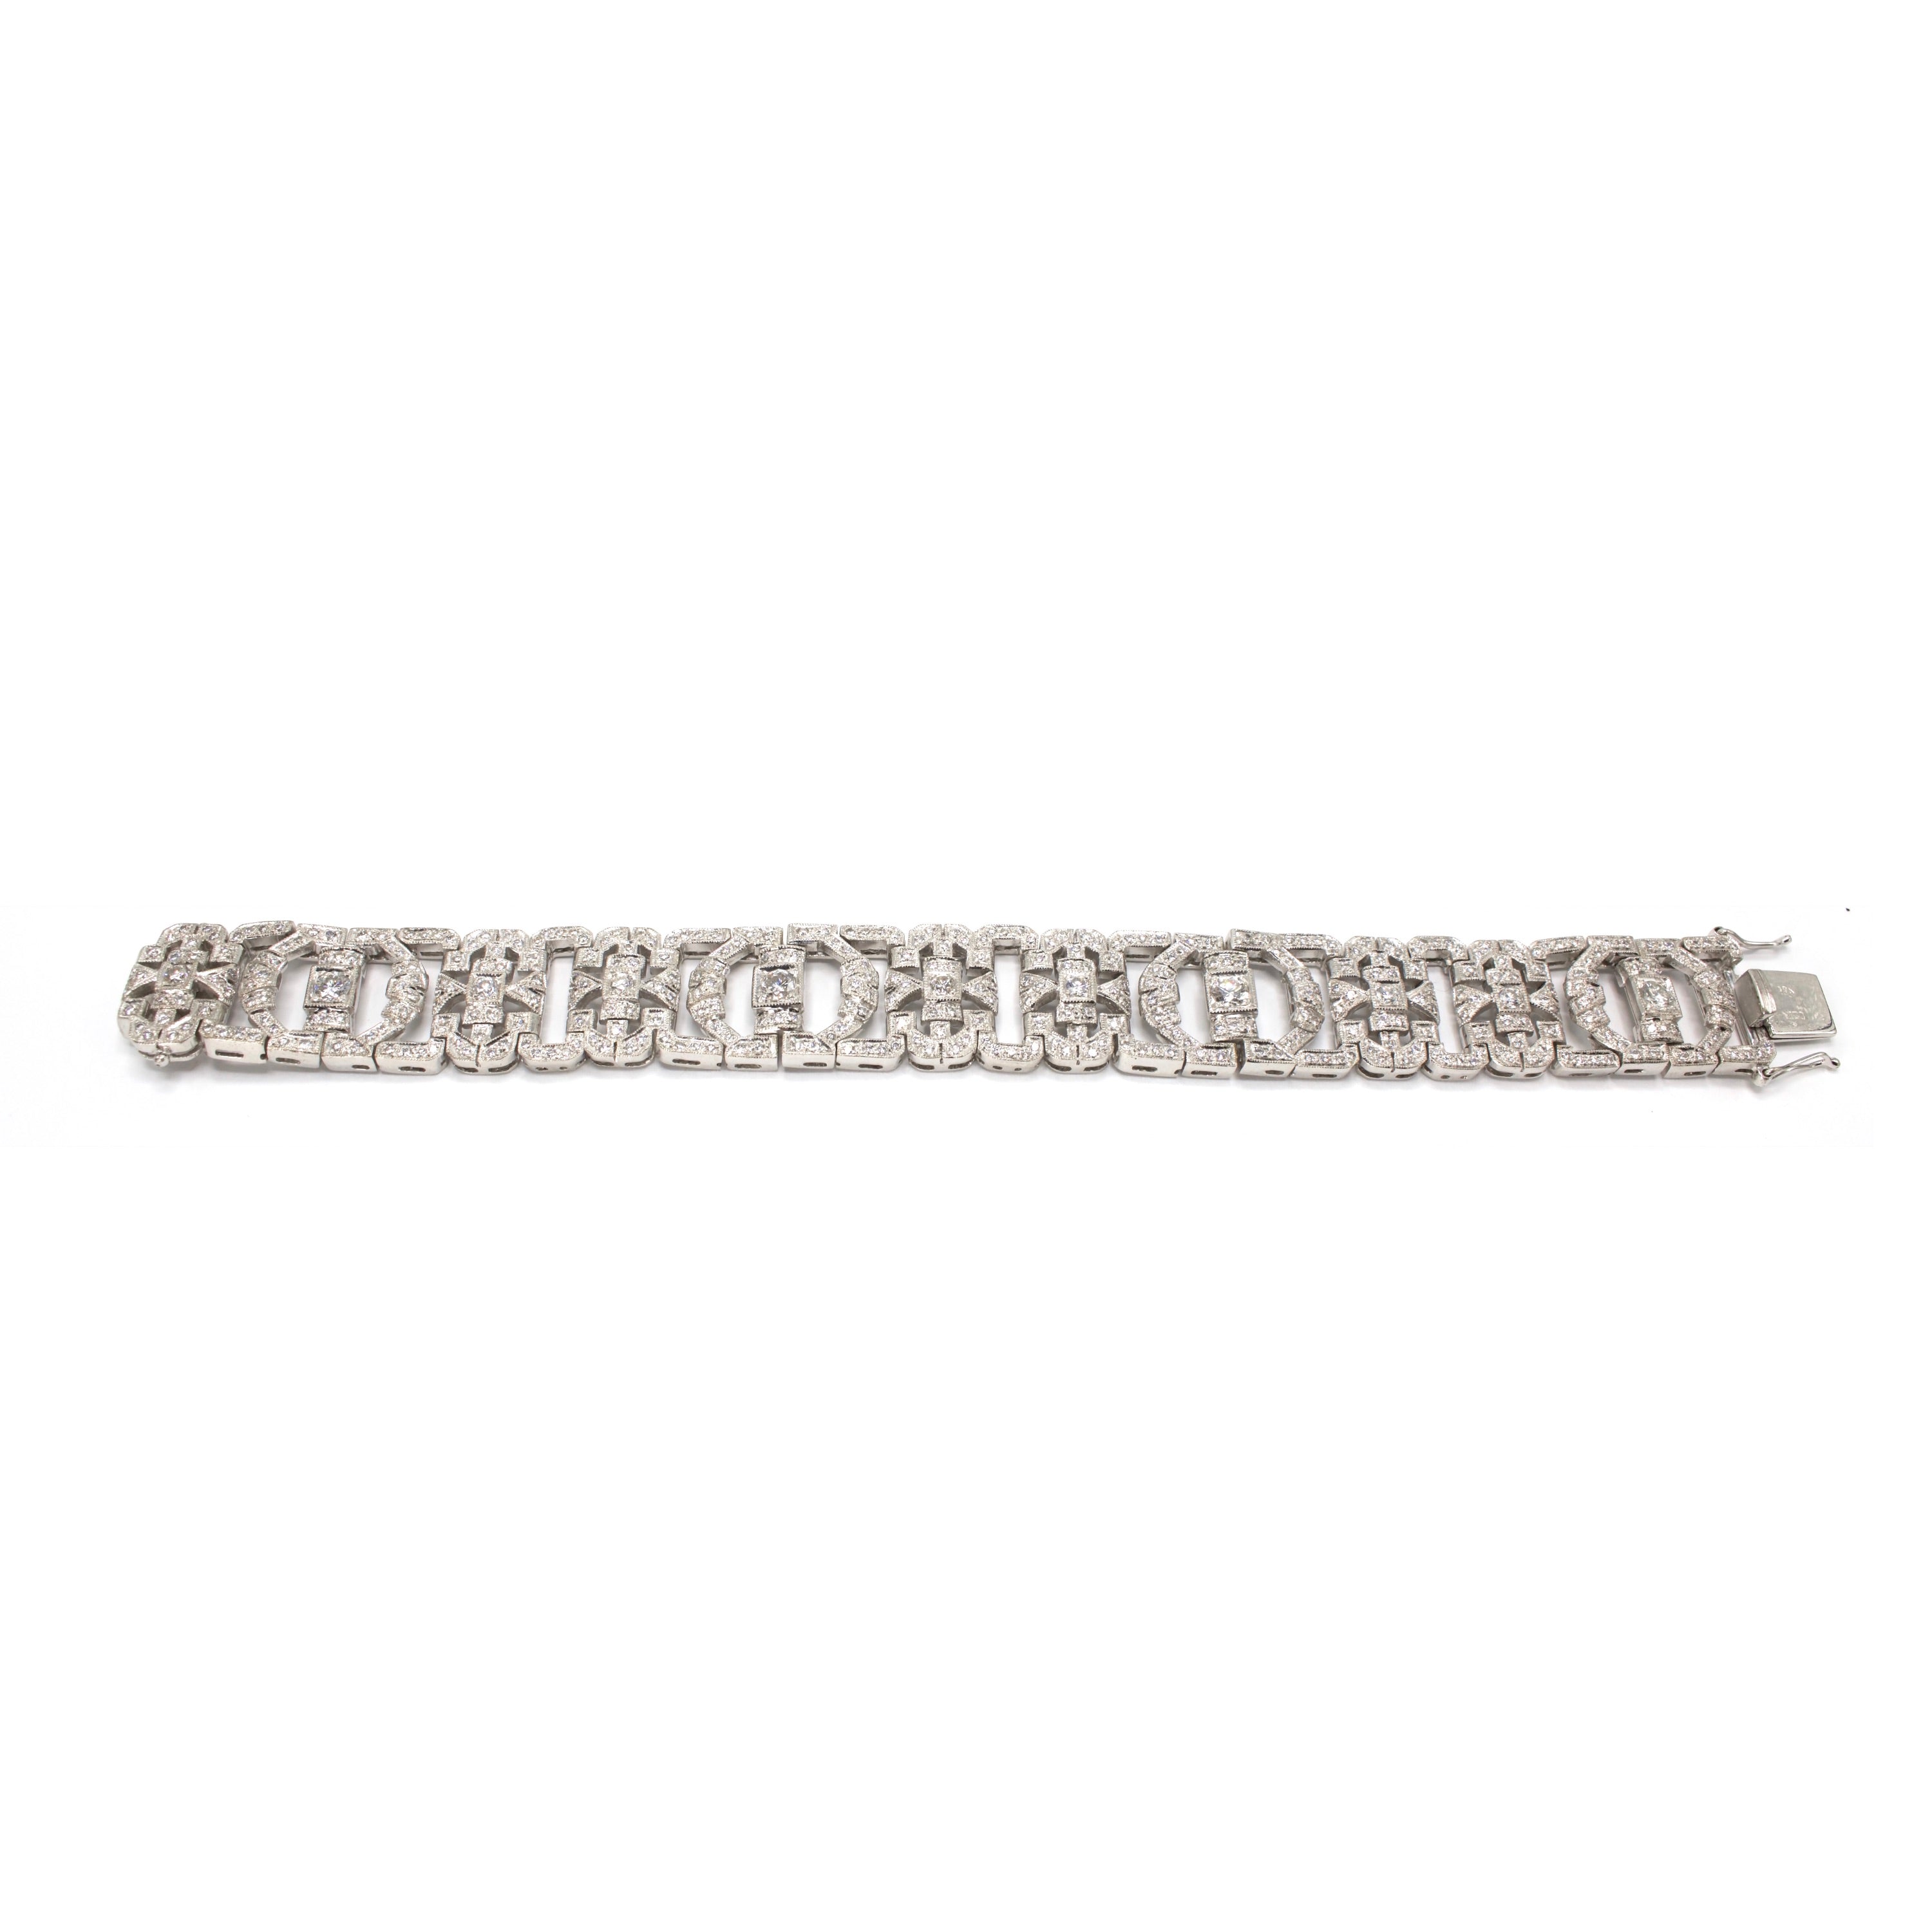 Estate Vintage Style 18K White Gold Link Bracelet with 4.00 Carats of Diamonds